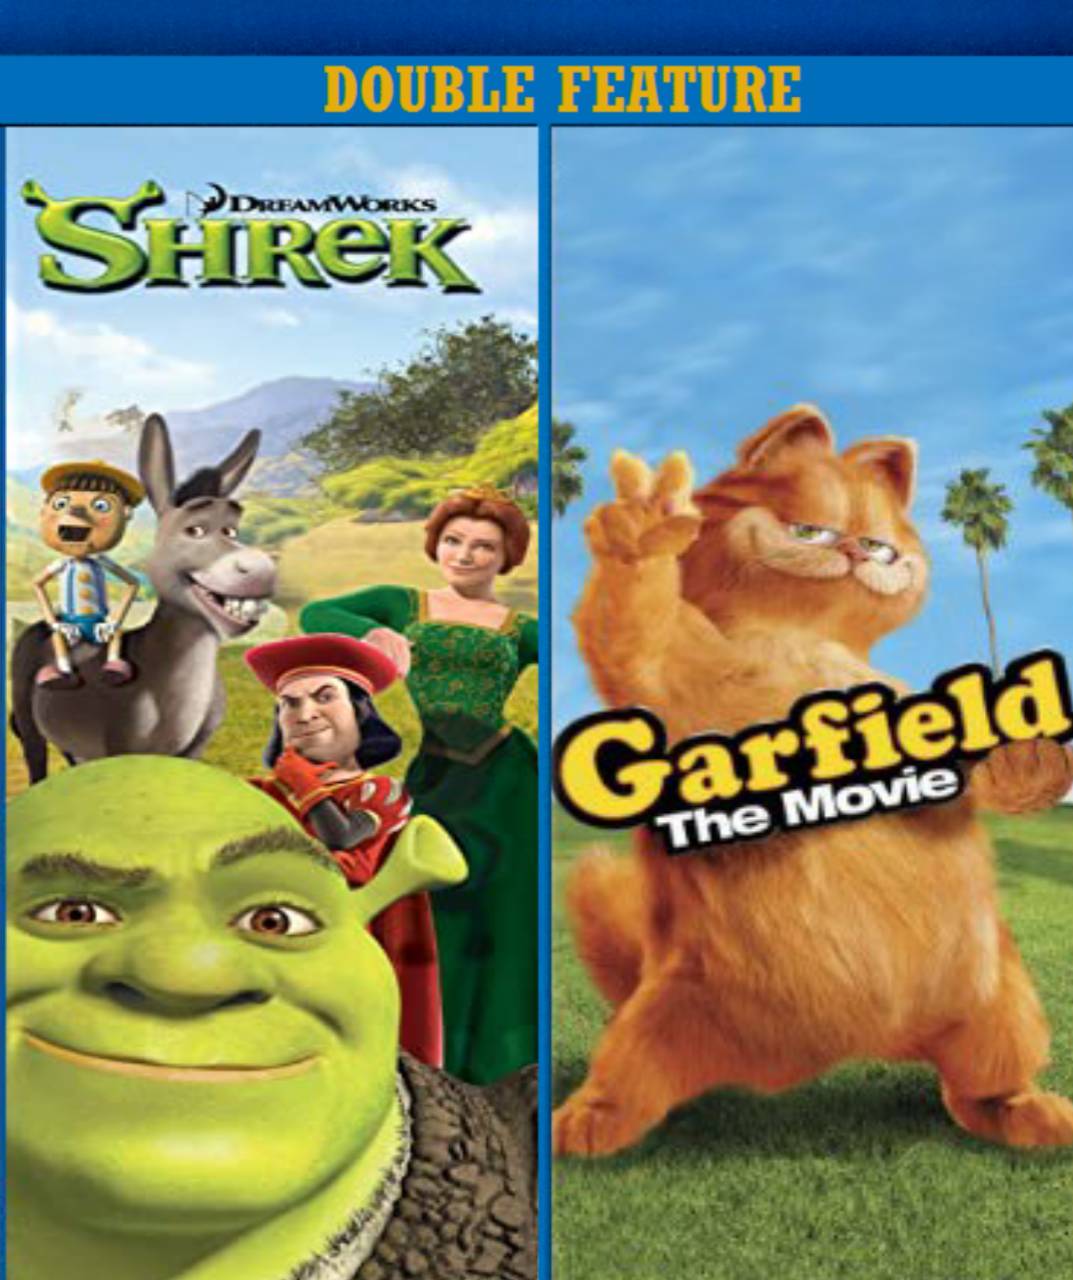 Shrek as the cartoon Garfield : r/weirddalle